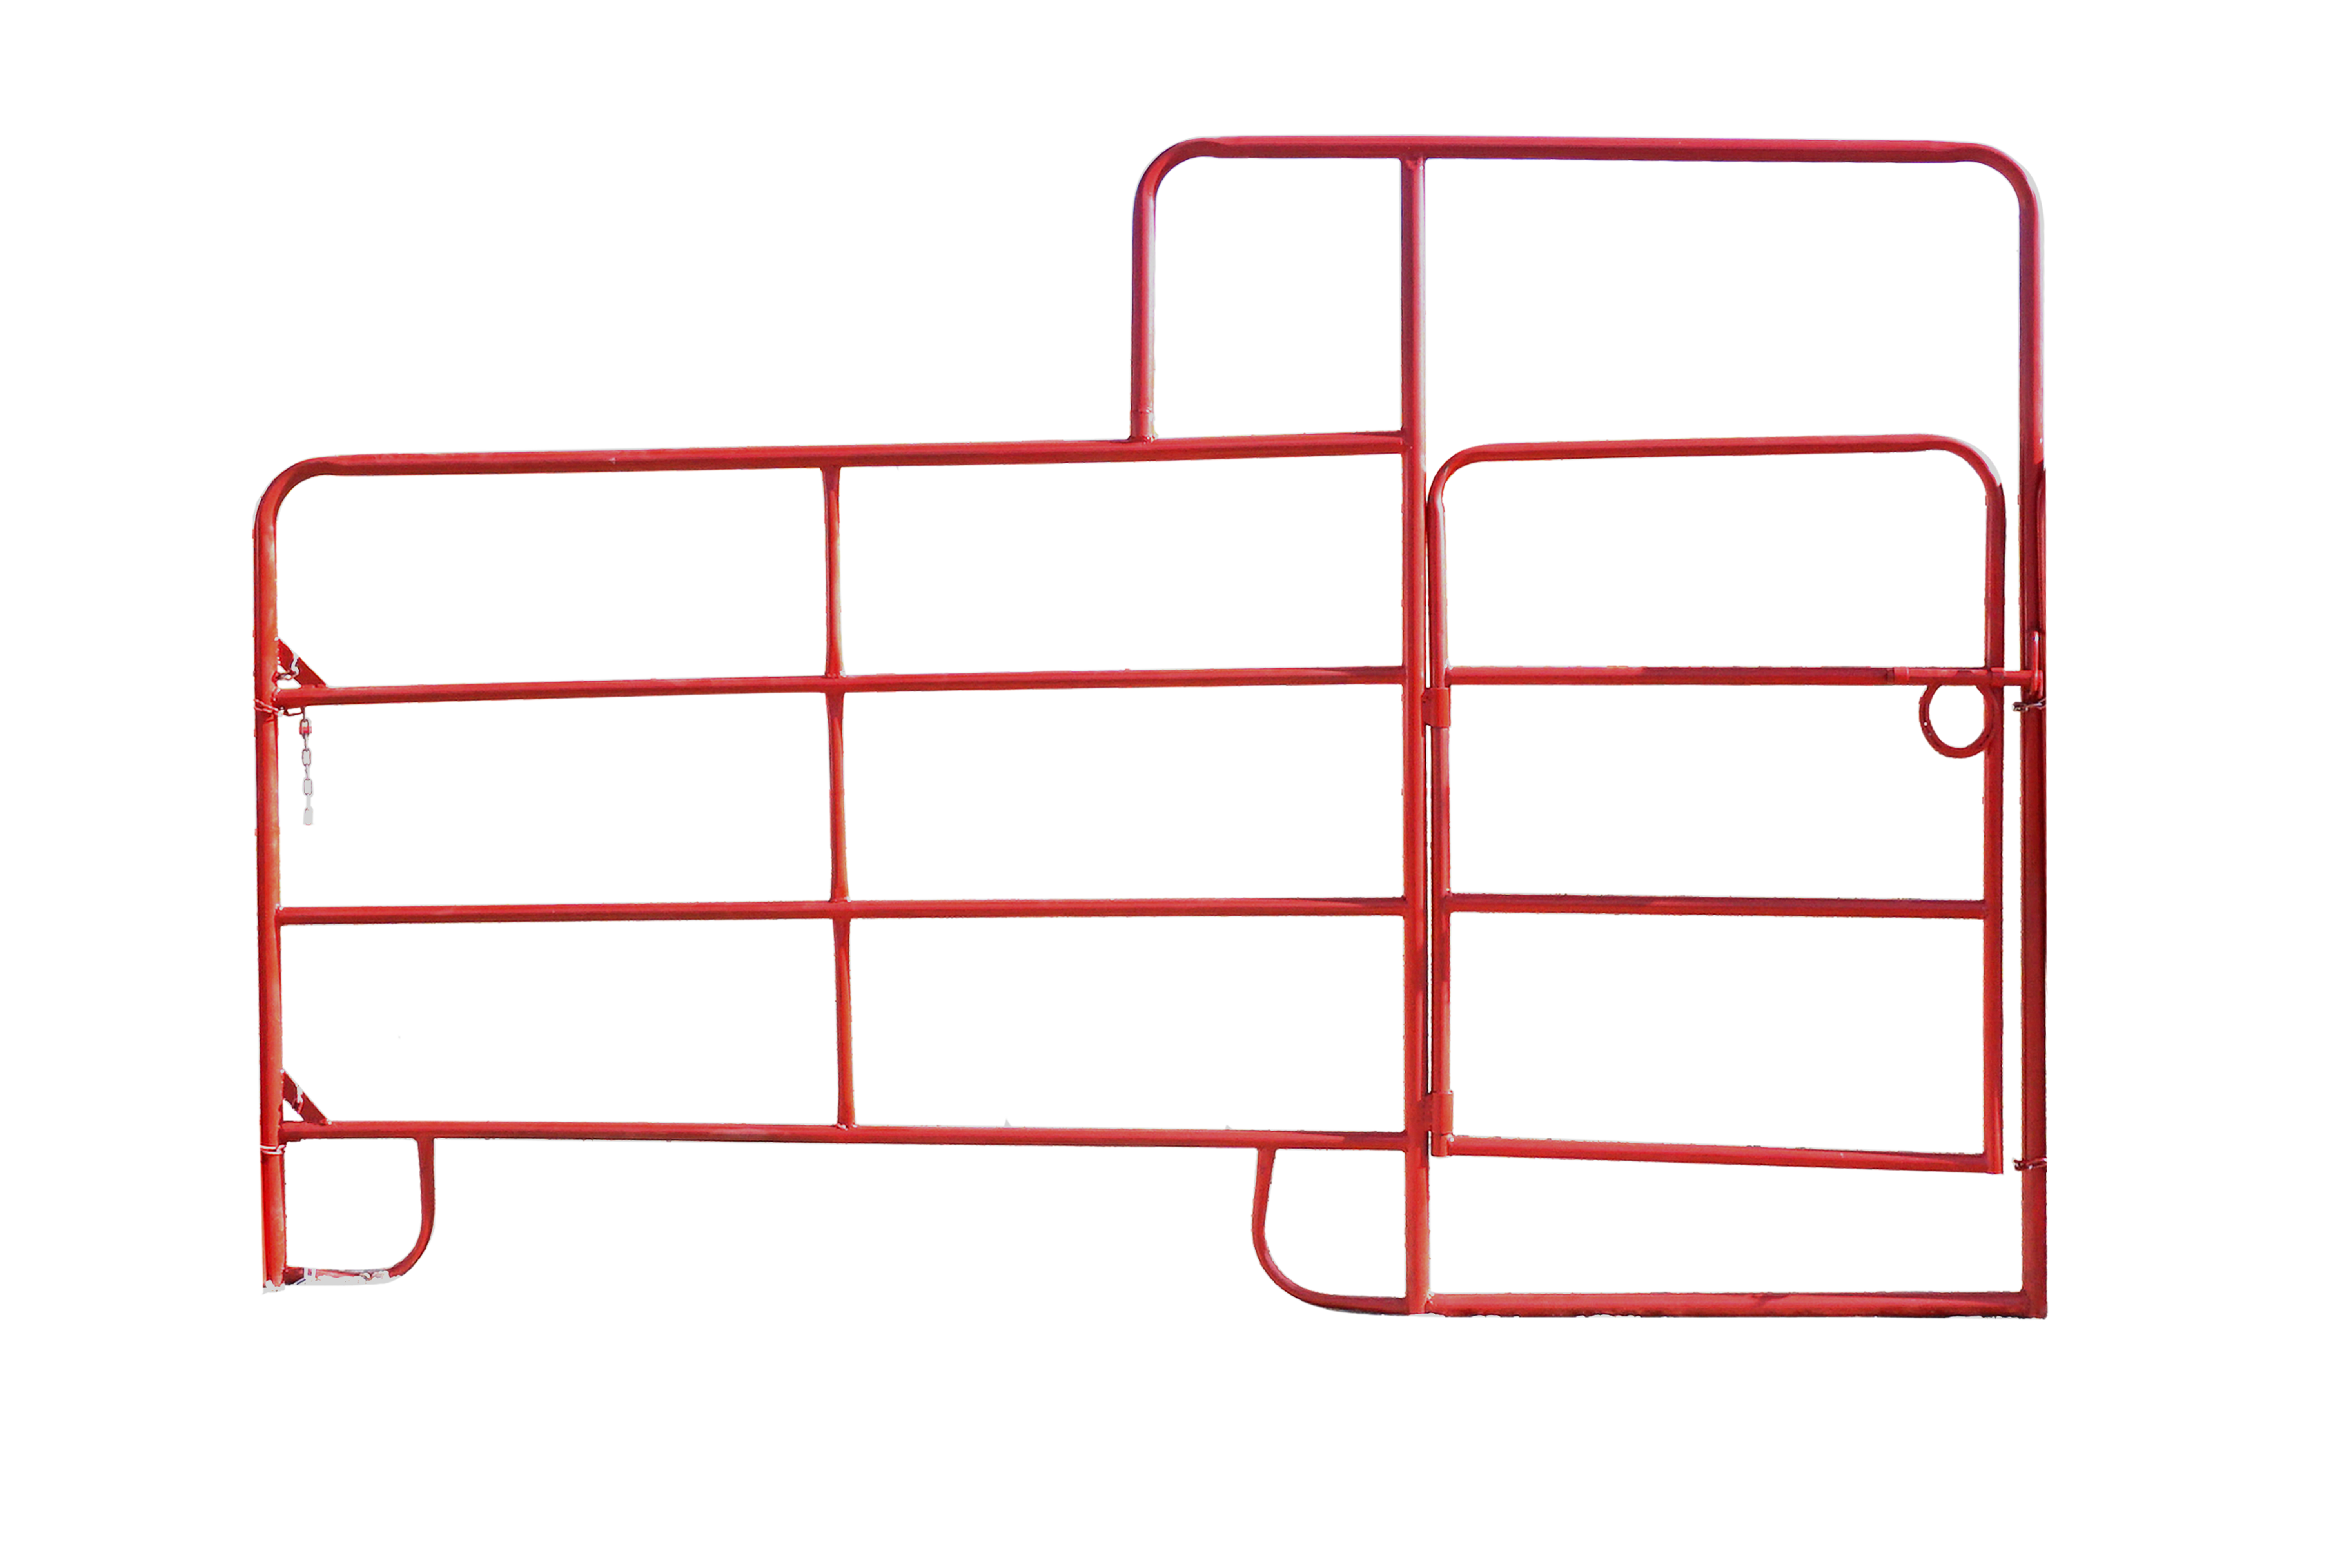 Puerta – Panel 4 tubos